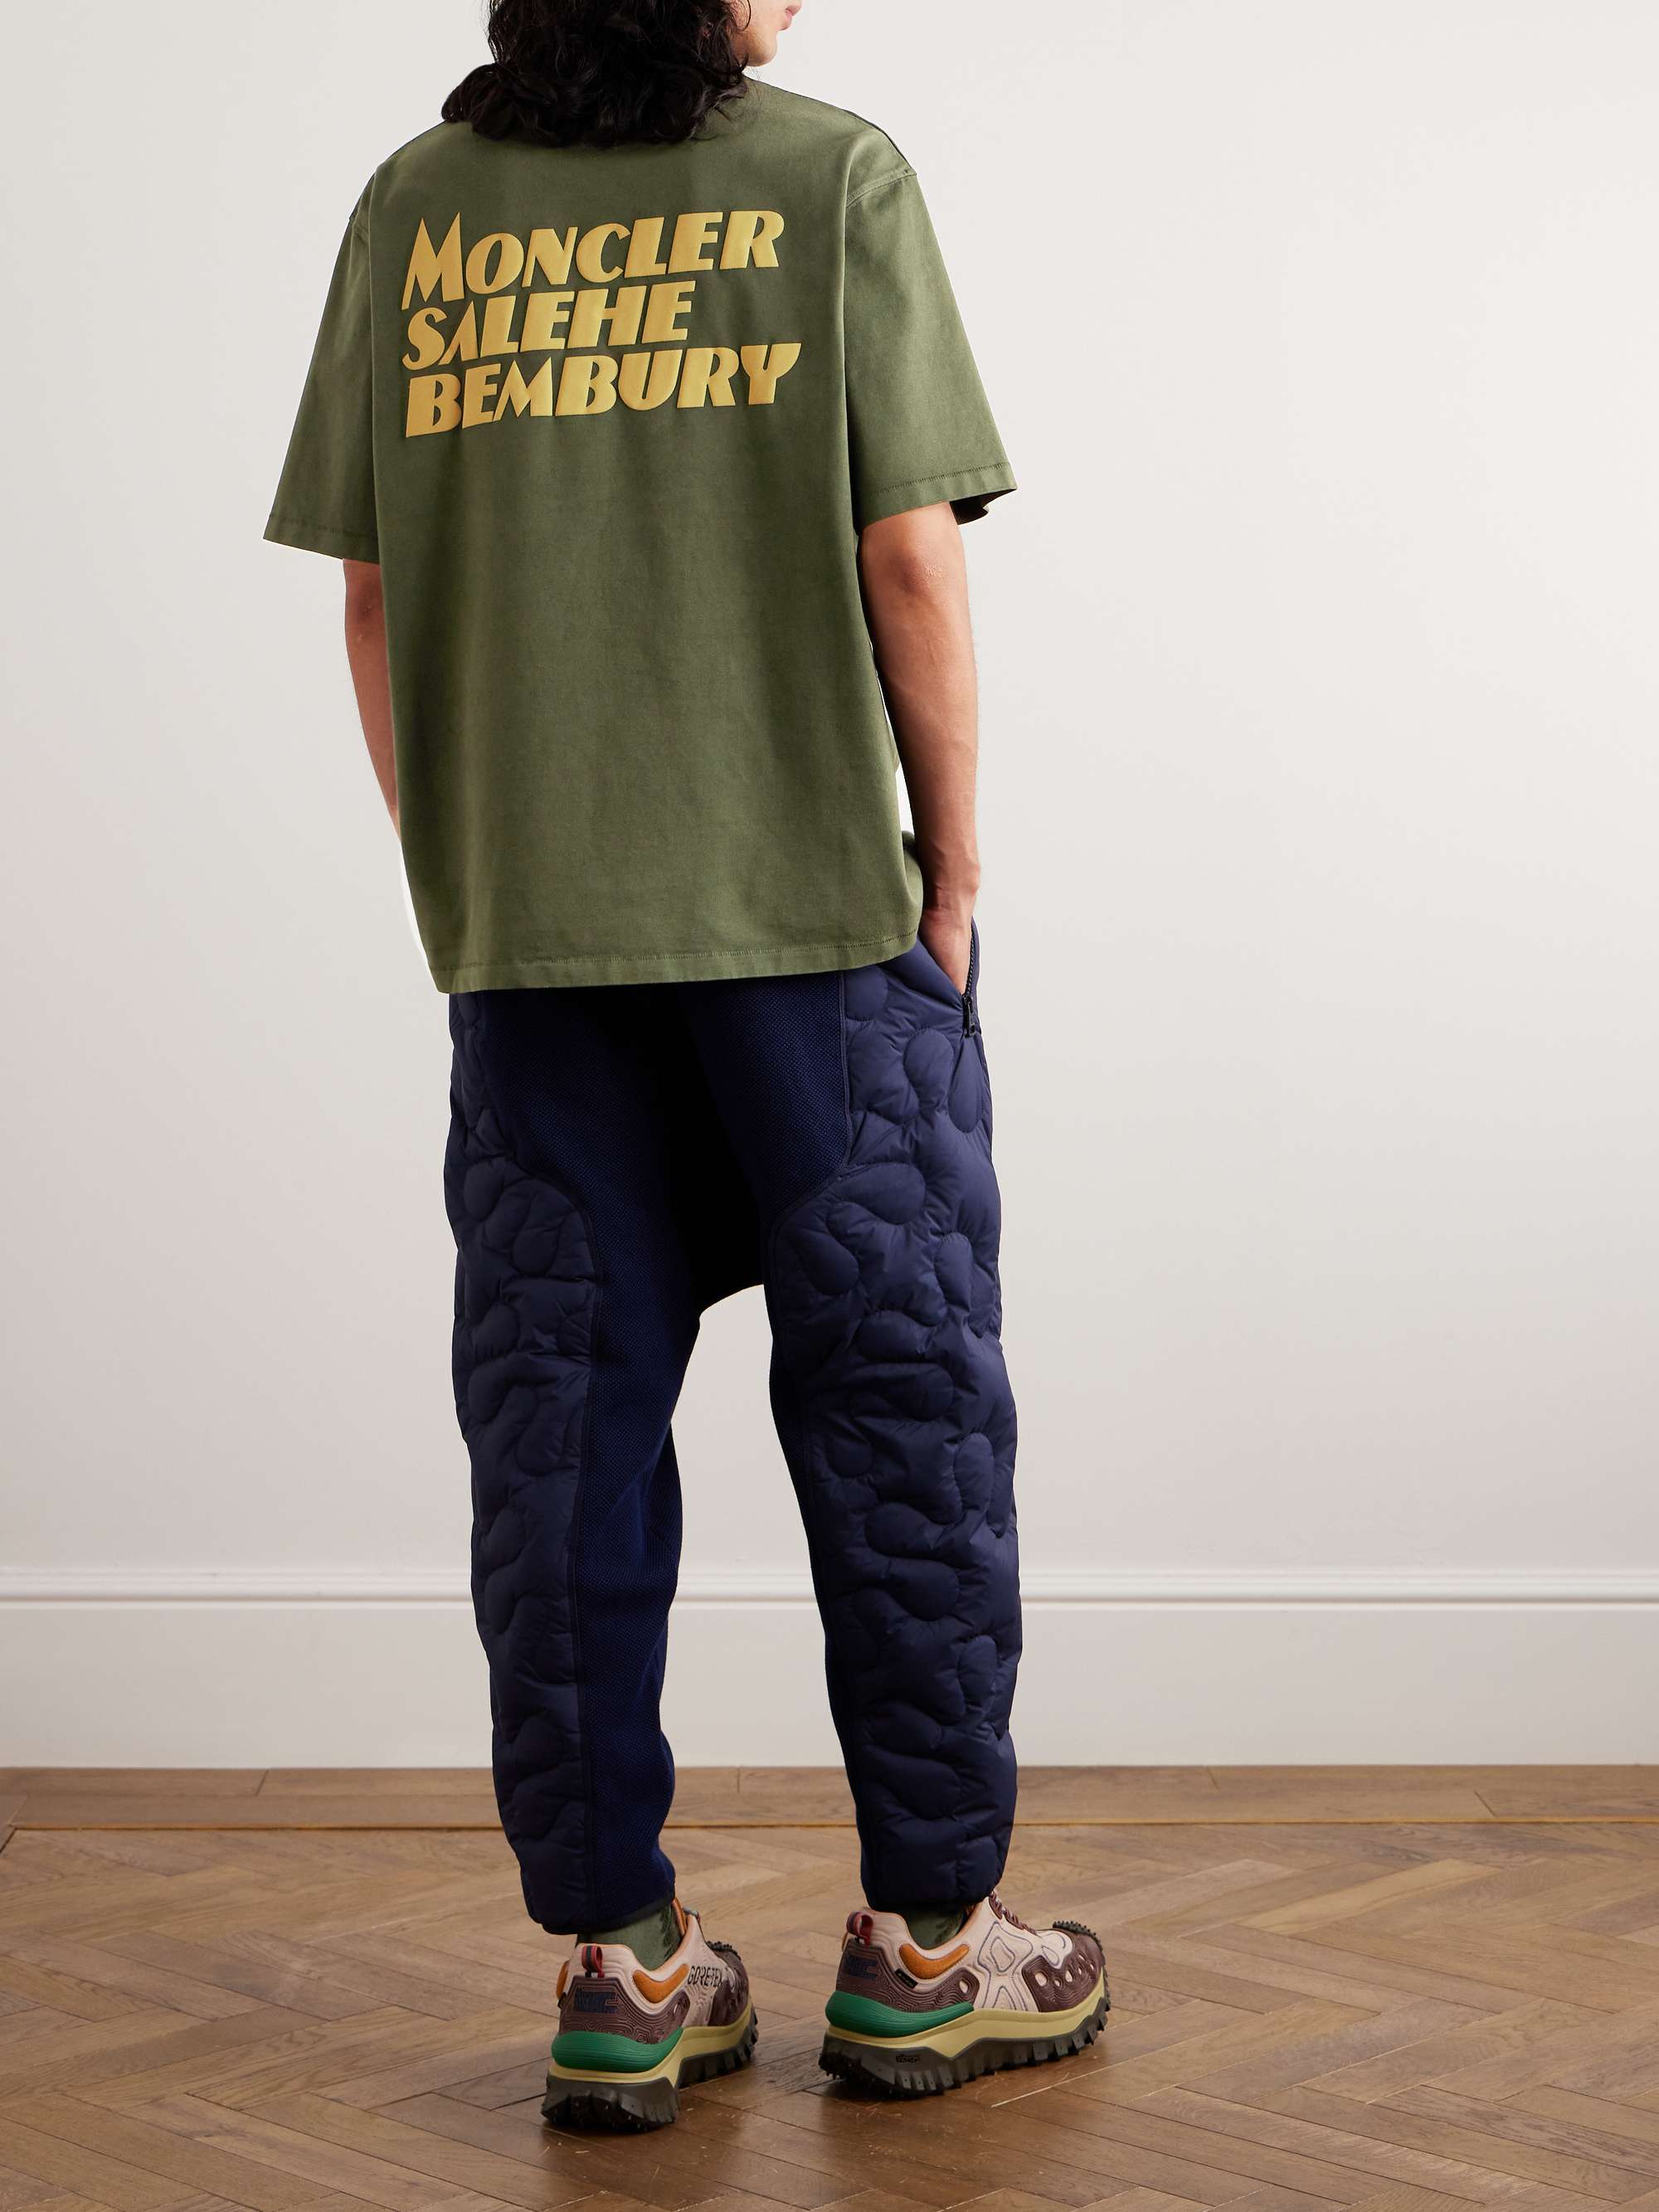 MONCLER GENIUS + Salehe Bembury Logo-Print Cotton-Jersey T-Shirt for ...